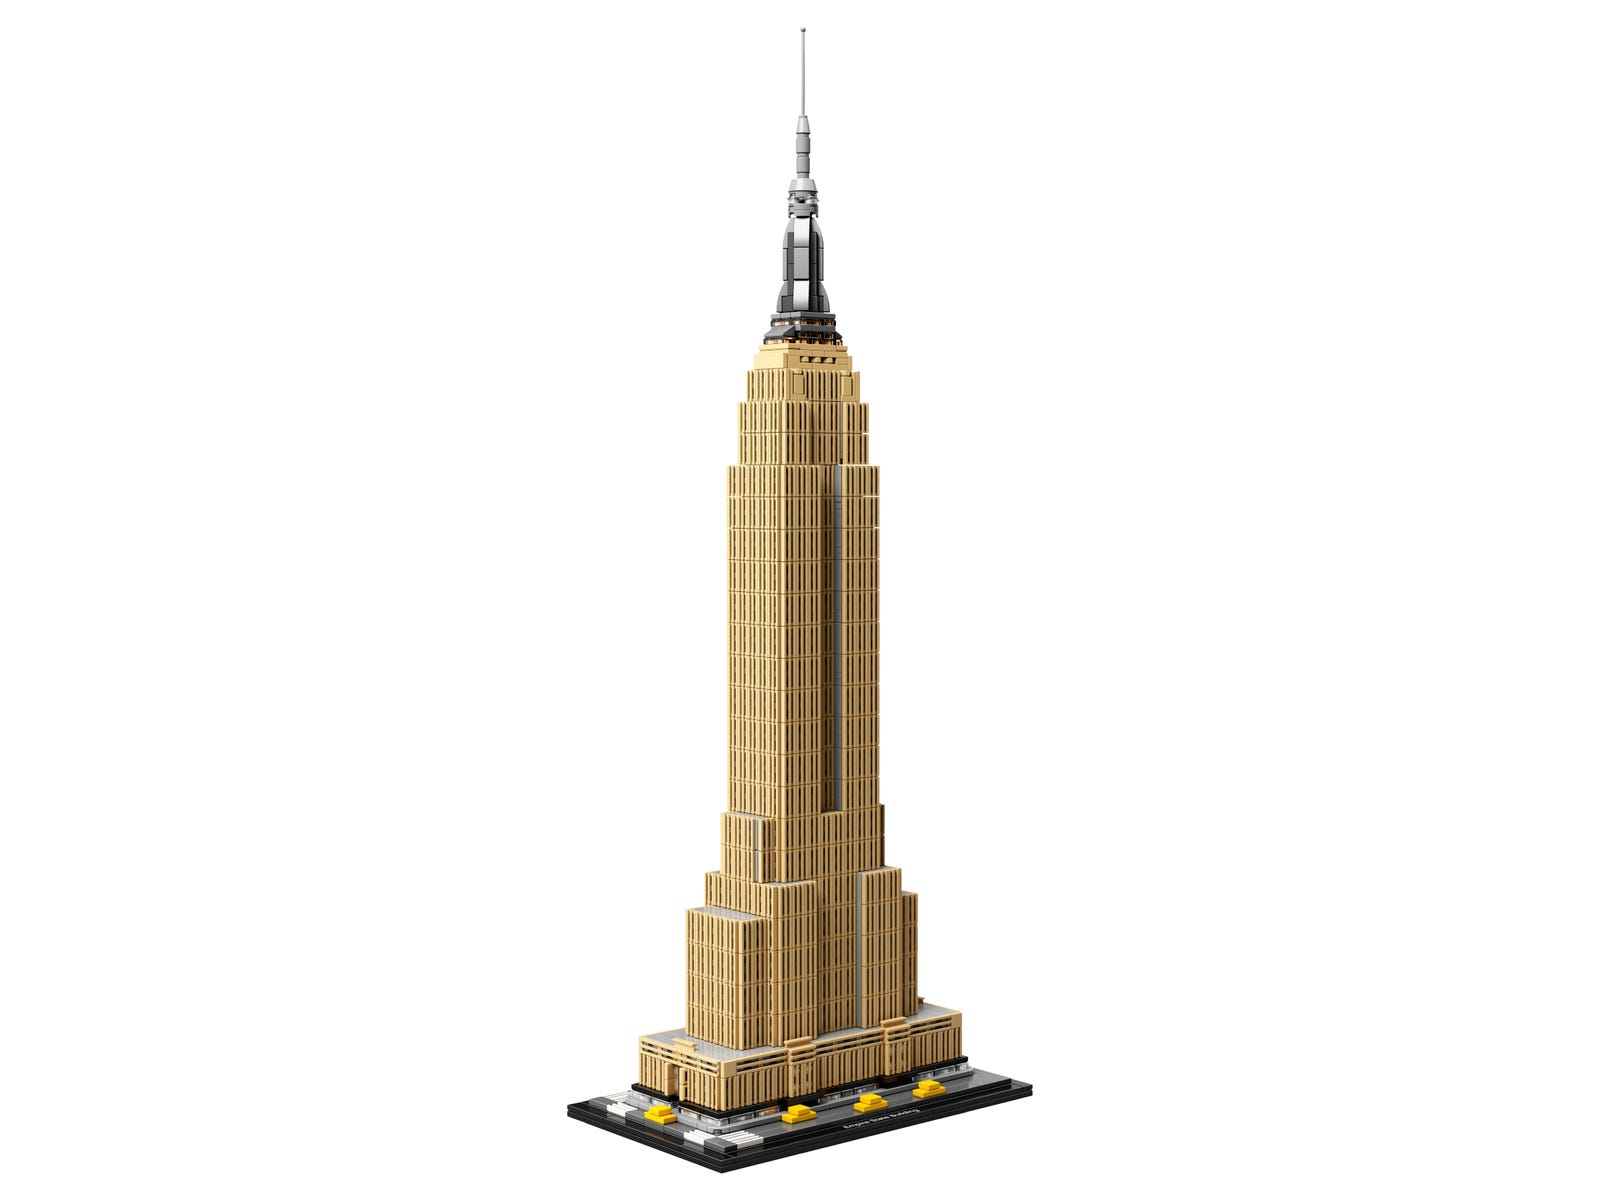 Empire State Building App